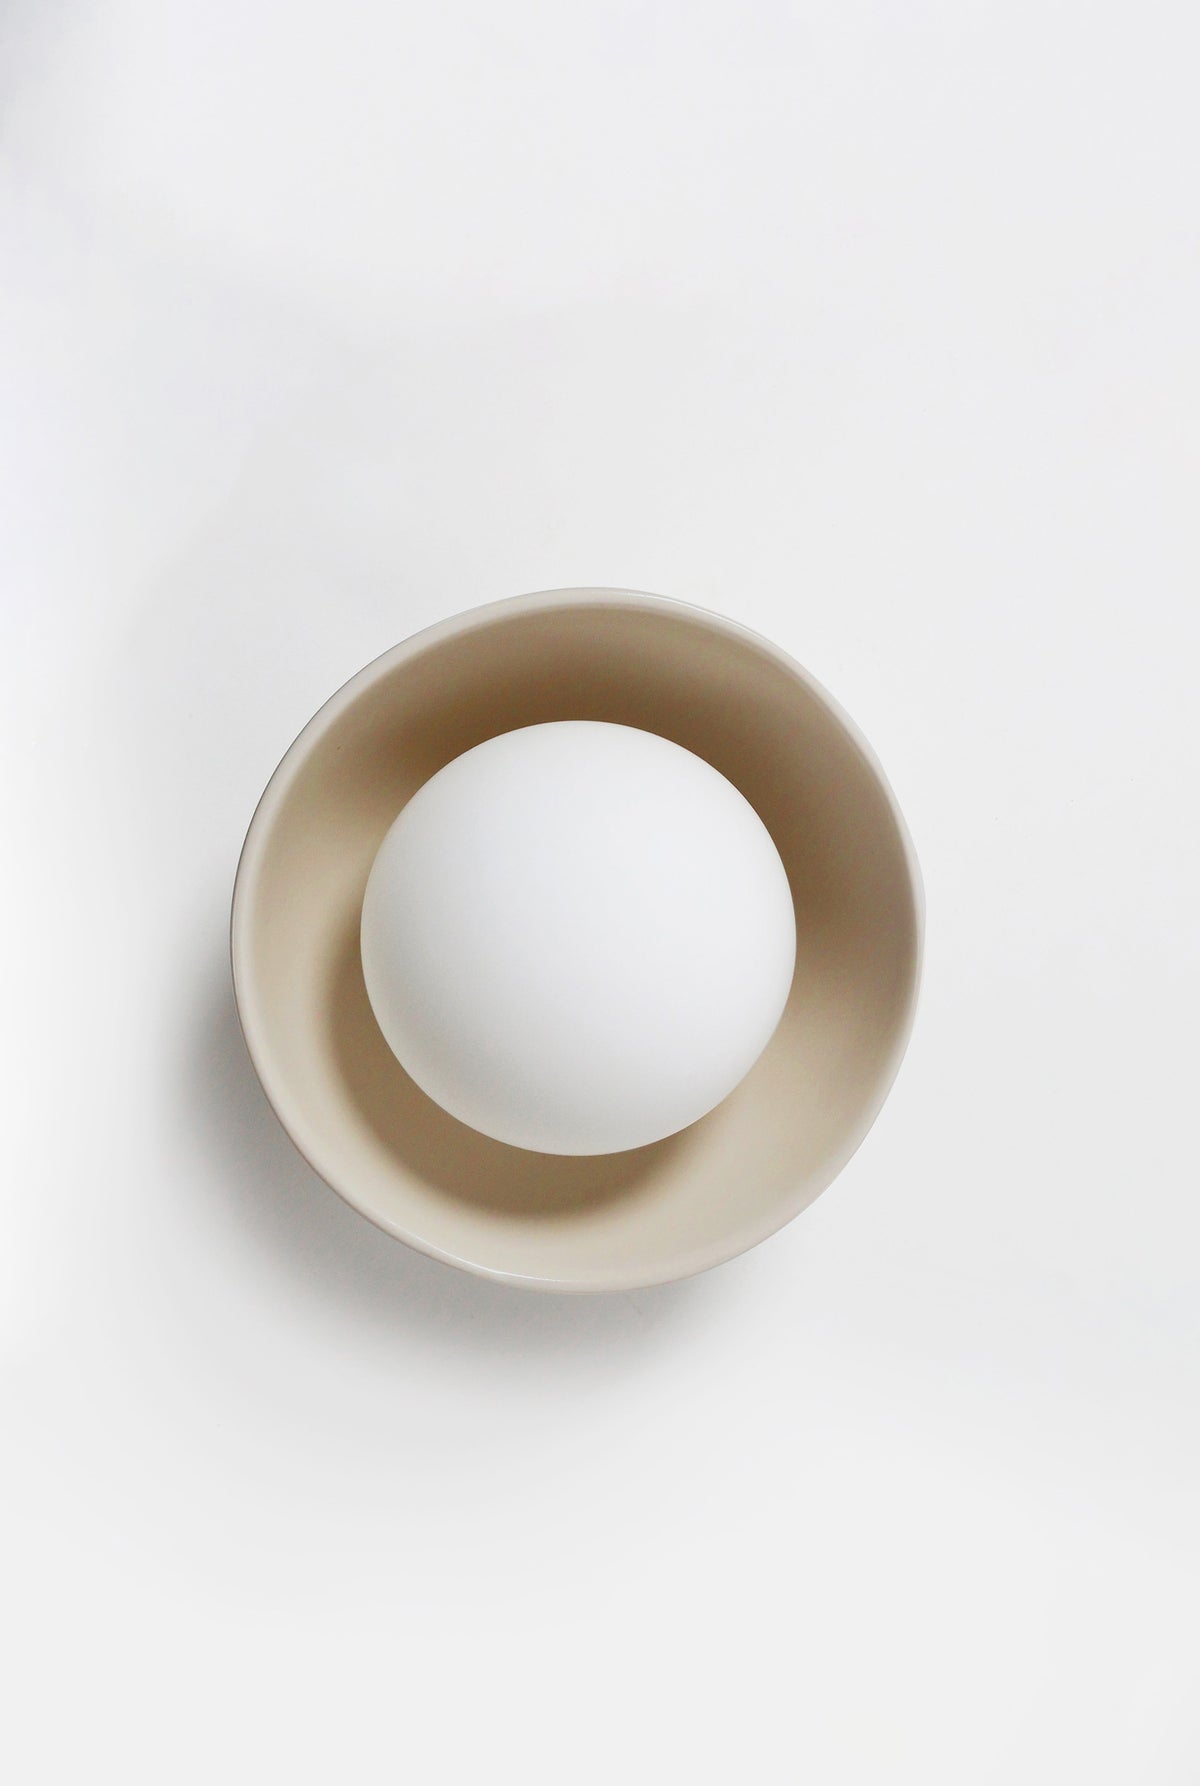 Ceramic Wall Bowl Sconce Light / Bone